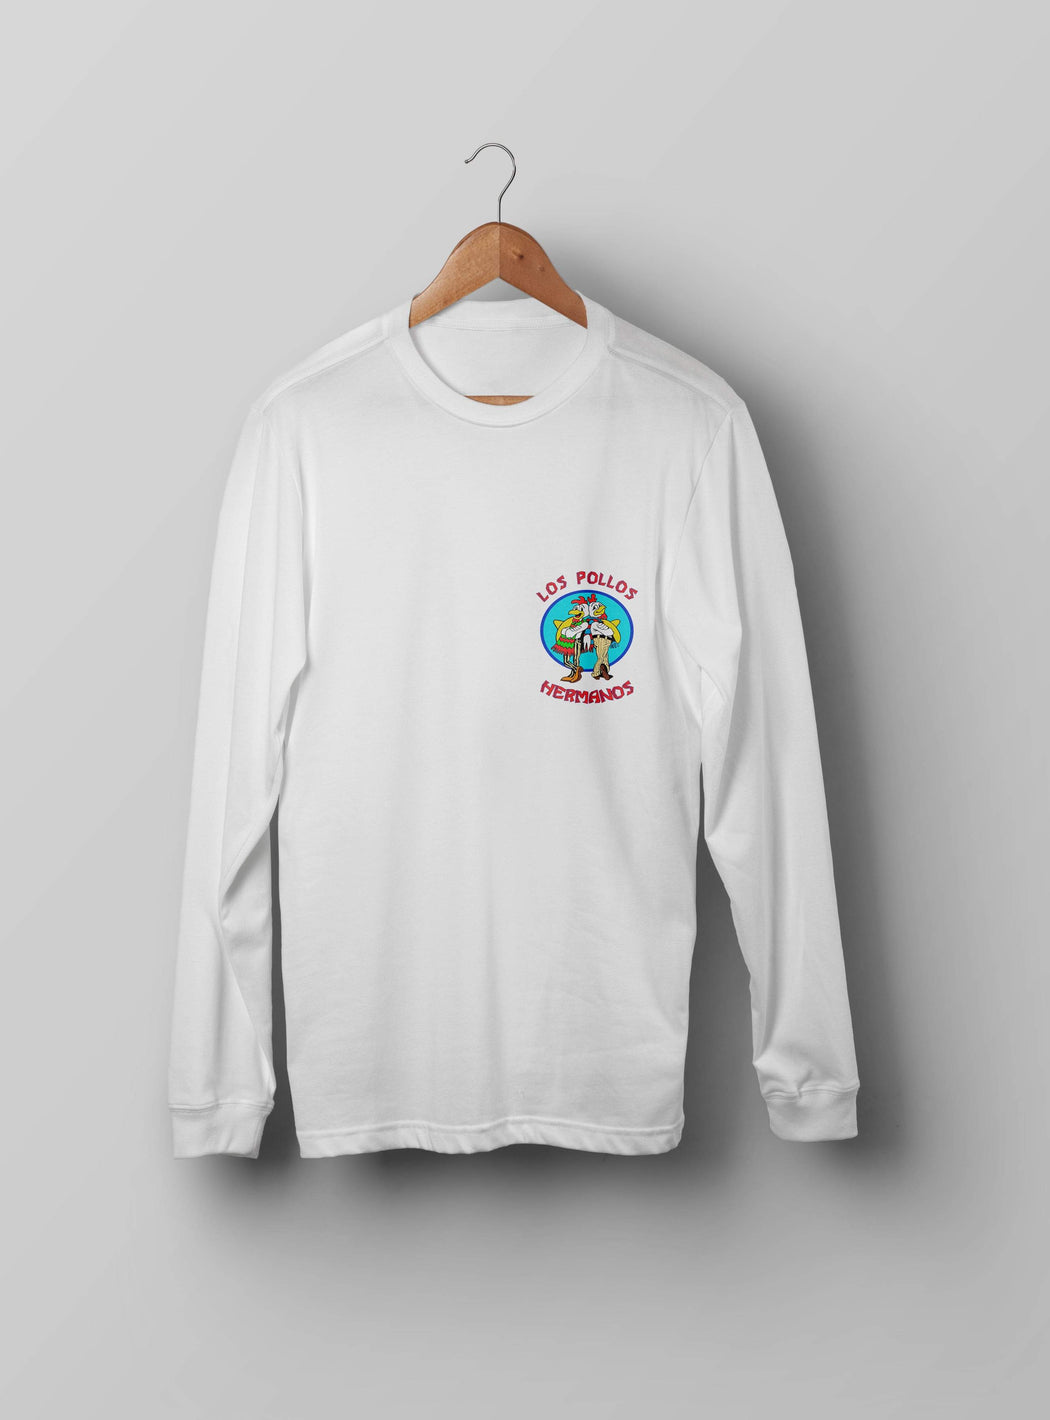 Los Pollos Hermanos White Sweatshirt - Kustom: Tees Factory